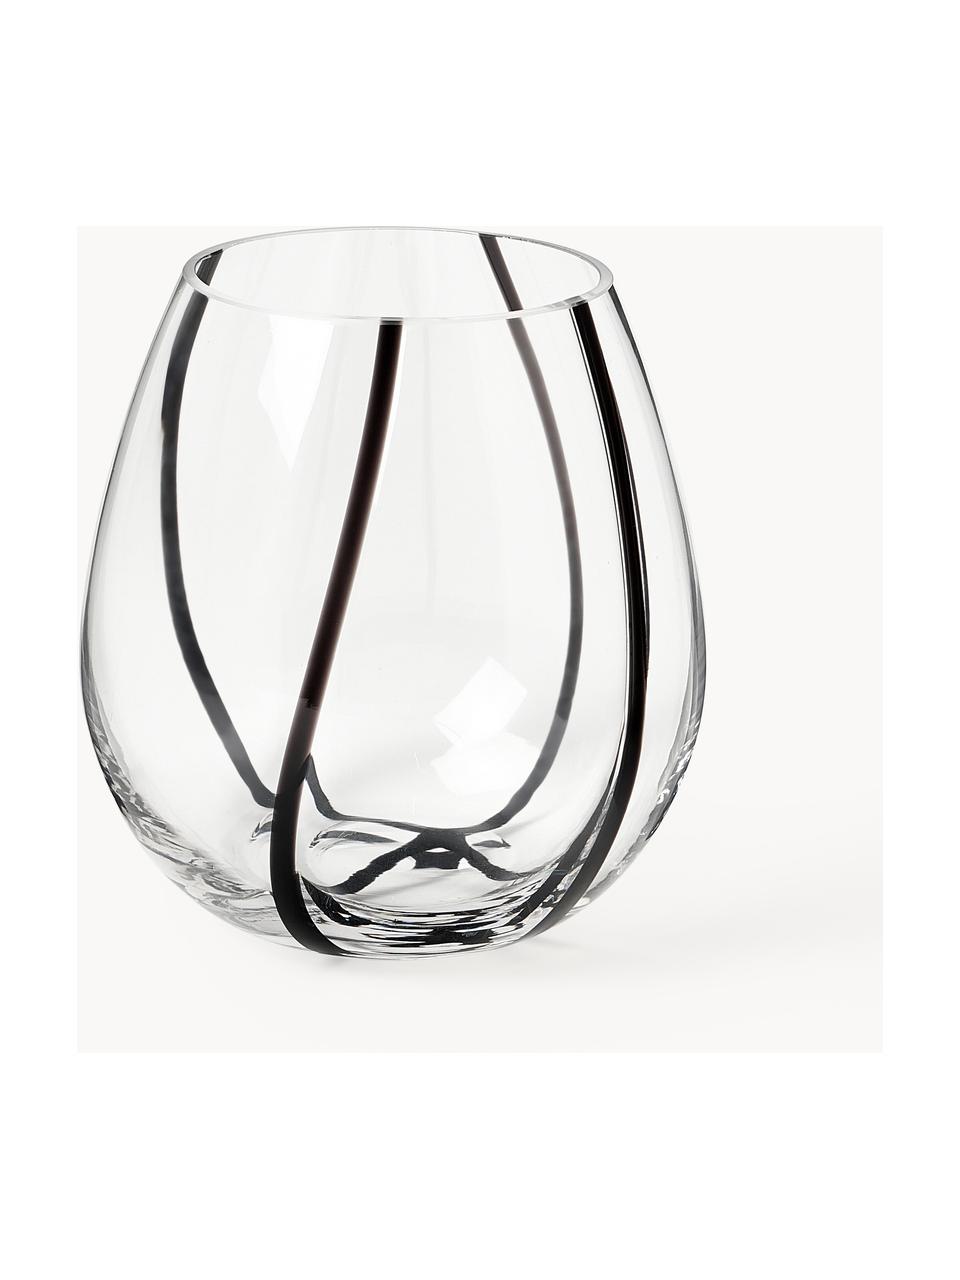 Jarrón de vidrio Kira, 18 cm, Vidrio sódico-cálcico, Transparente, negro, Ø 17 x Al 18 cm